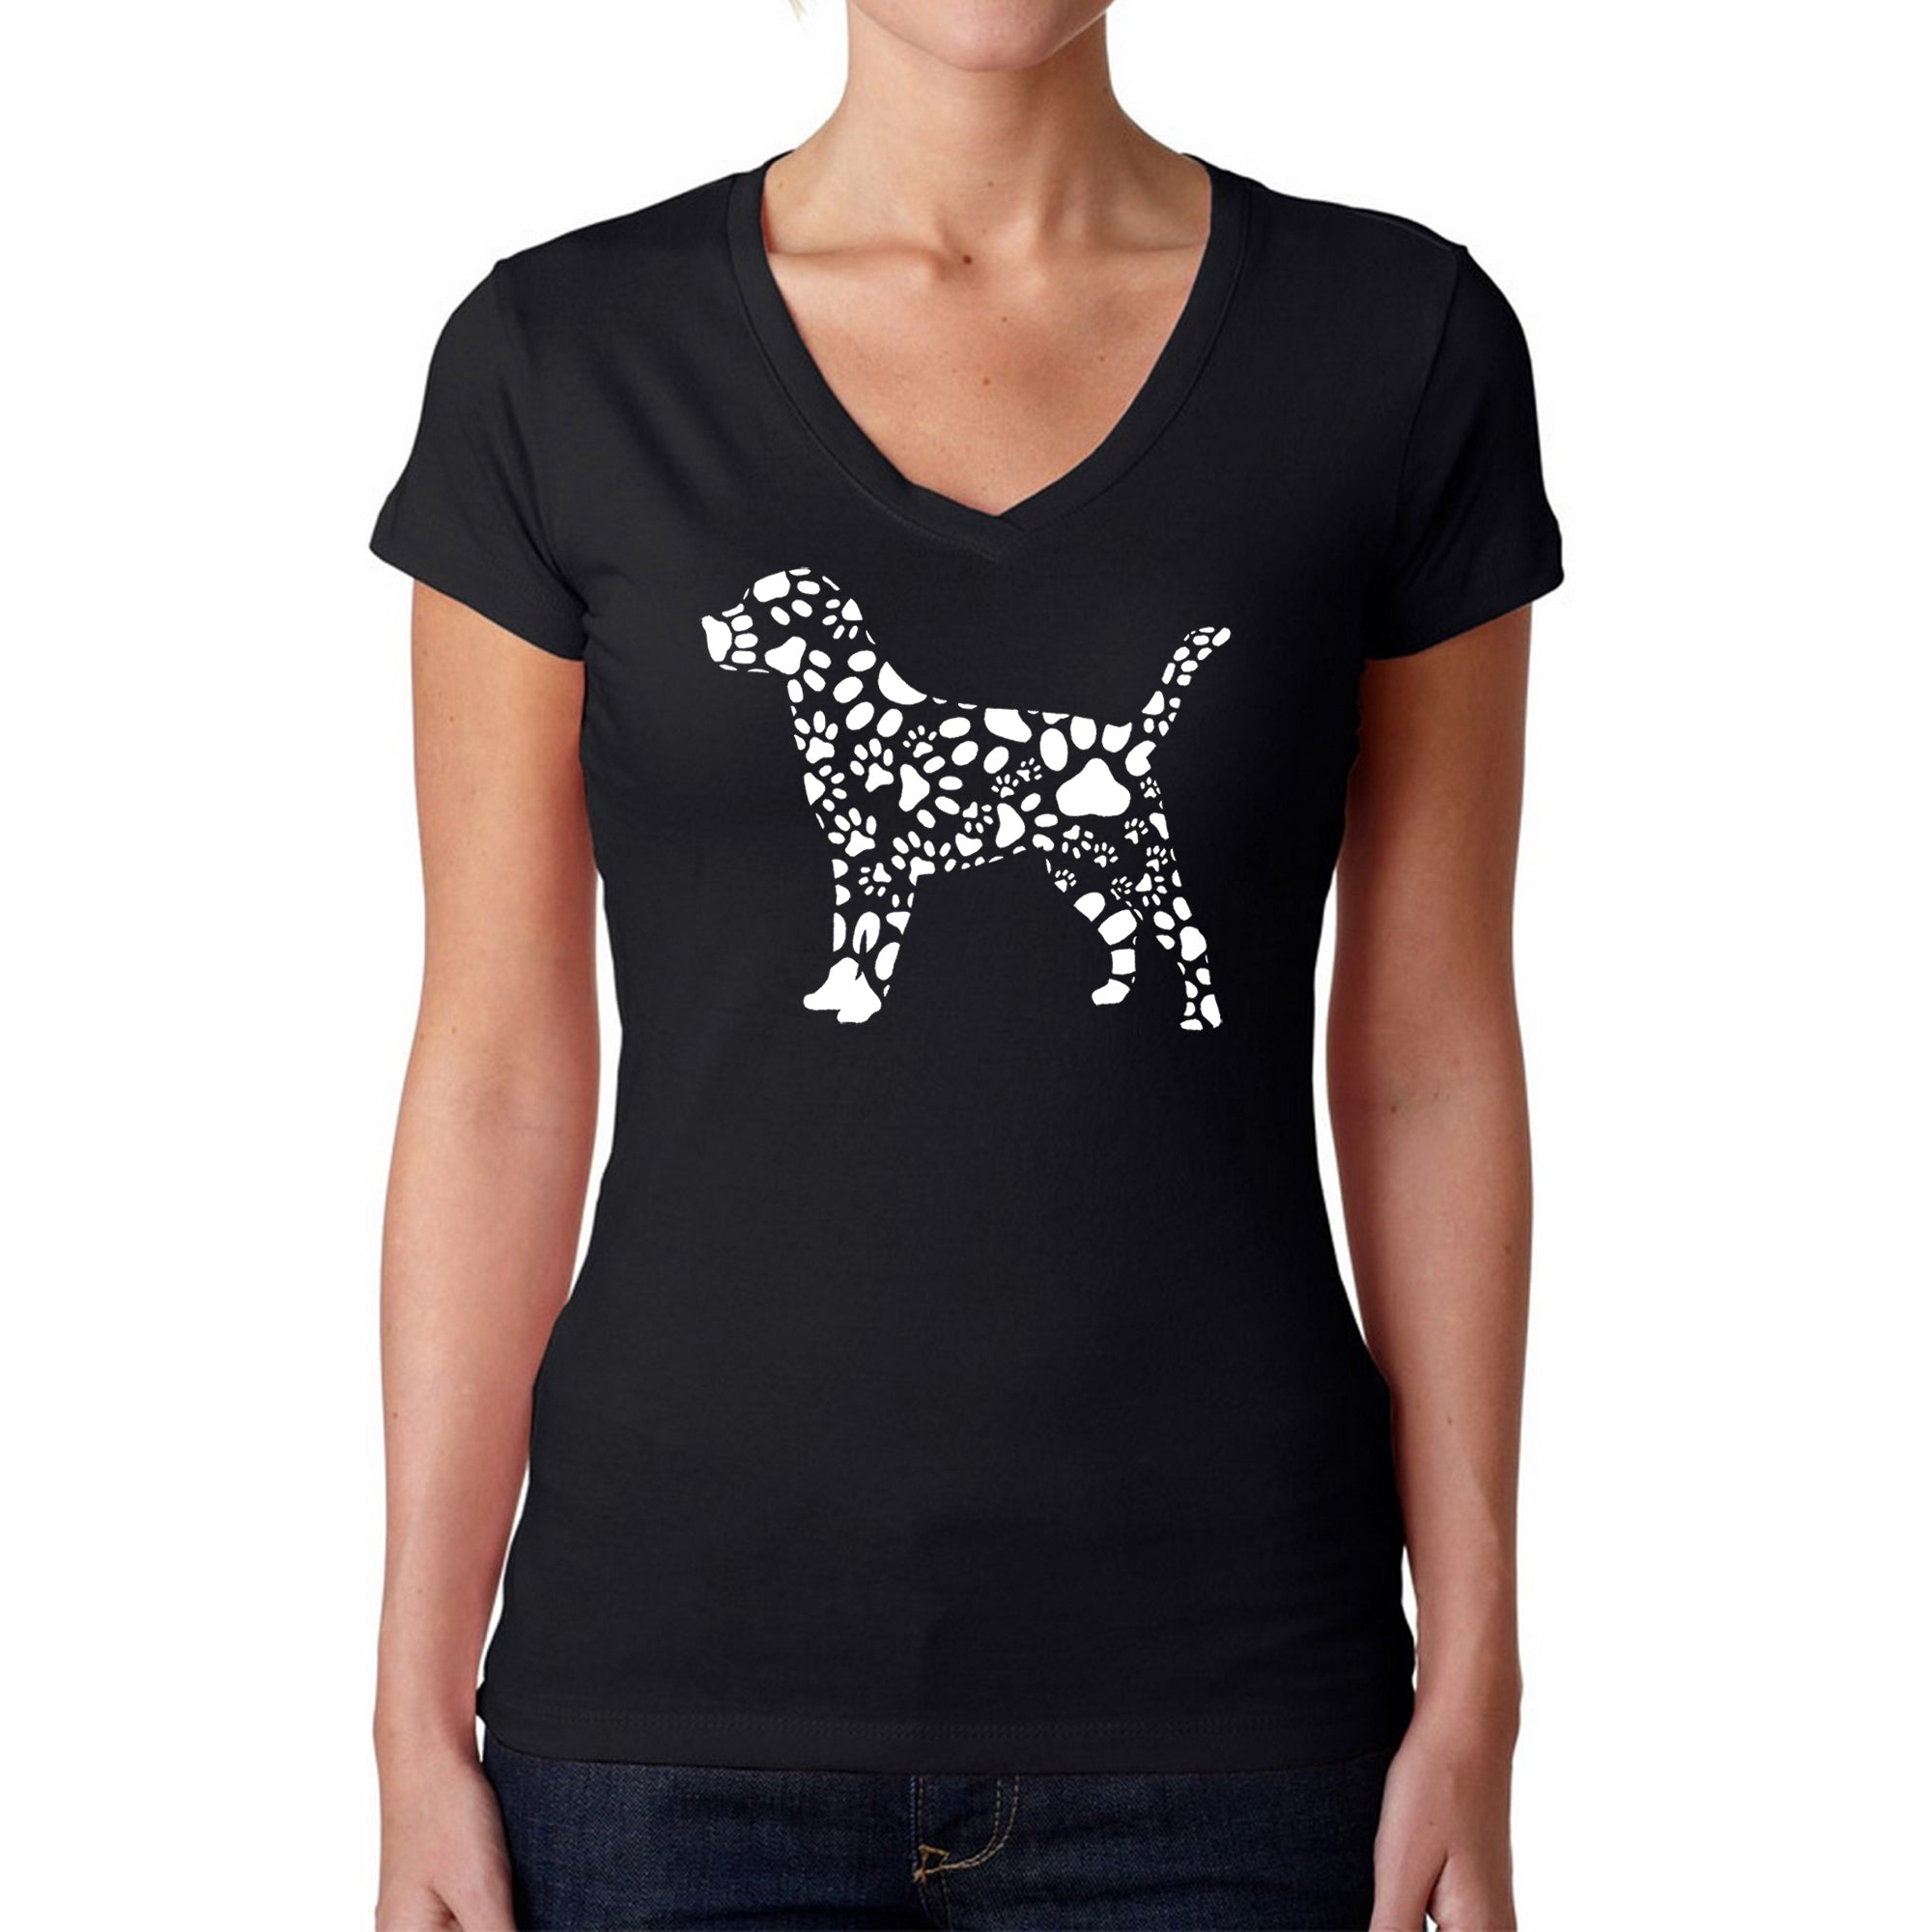 Dog Paw Prints - Women's Word Art V-Neck T-Shirt - Black - Small